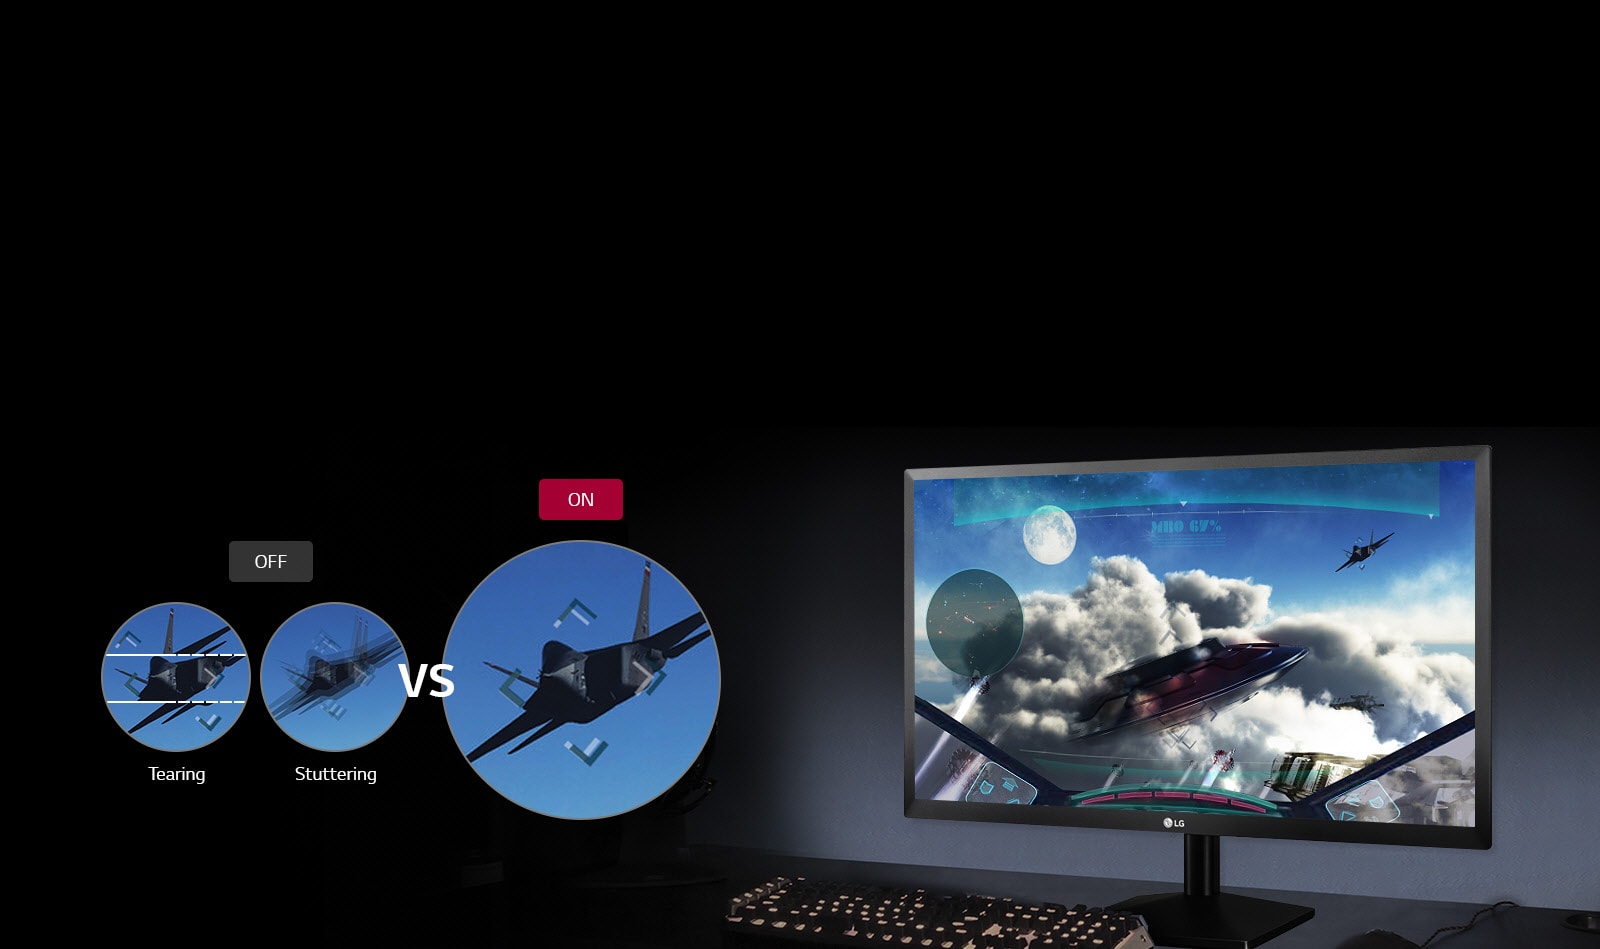 LG 24 '' Monitor LG LED Full HD IPS con AMD FreeSync | LG Ecuador